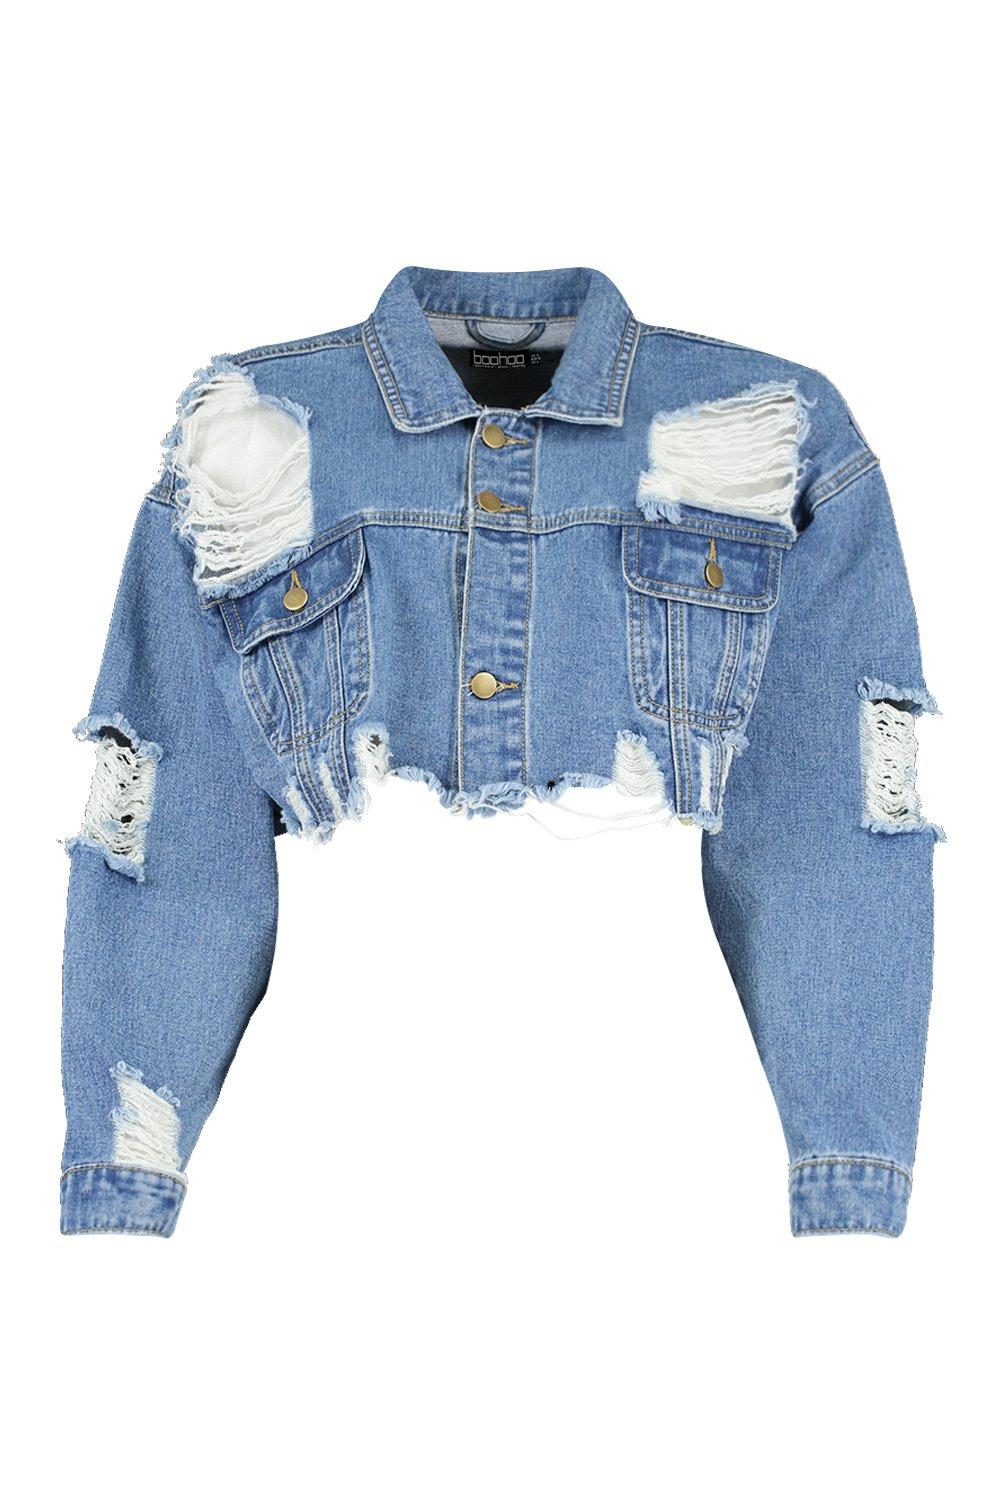 cropped jean jacket distressed